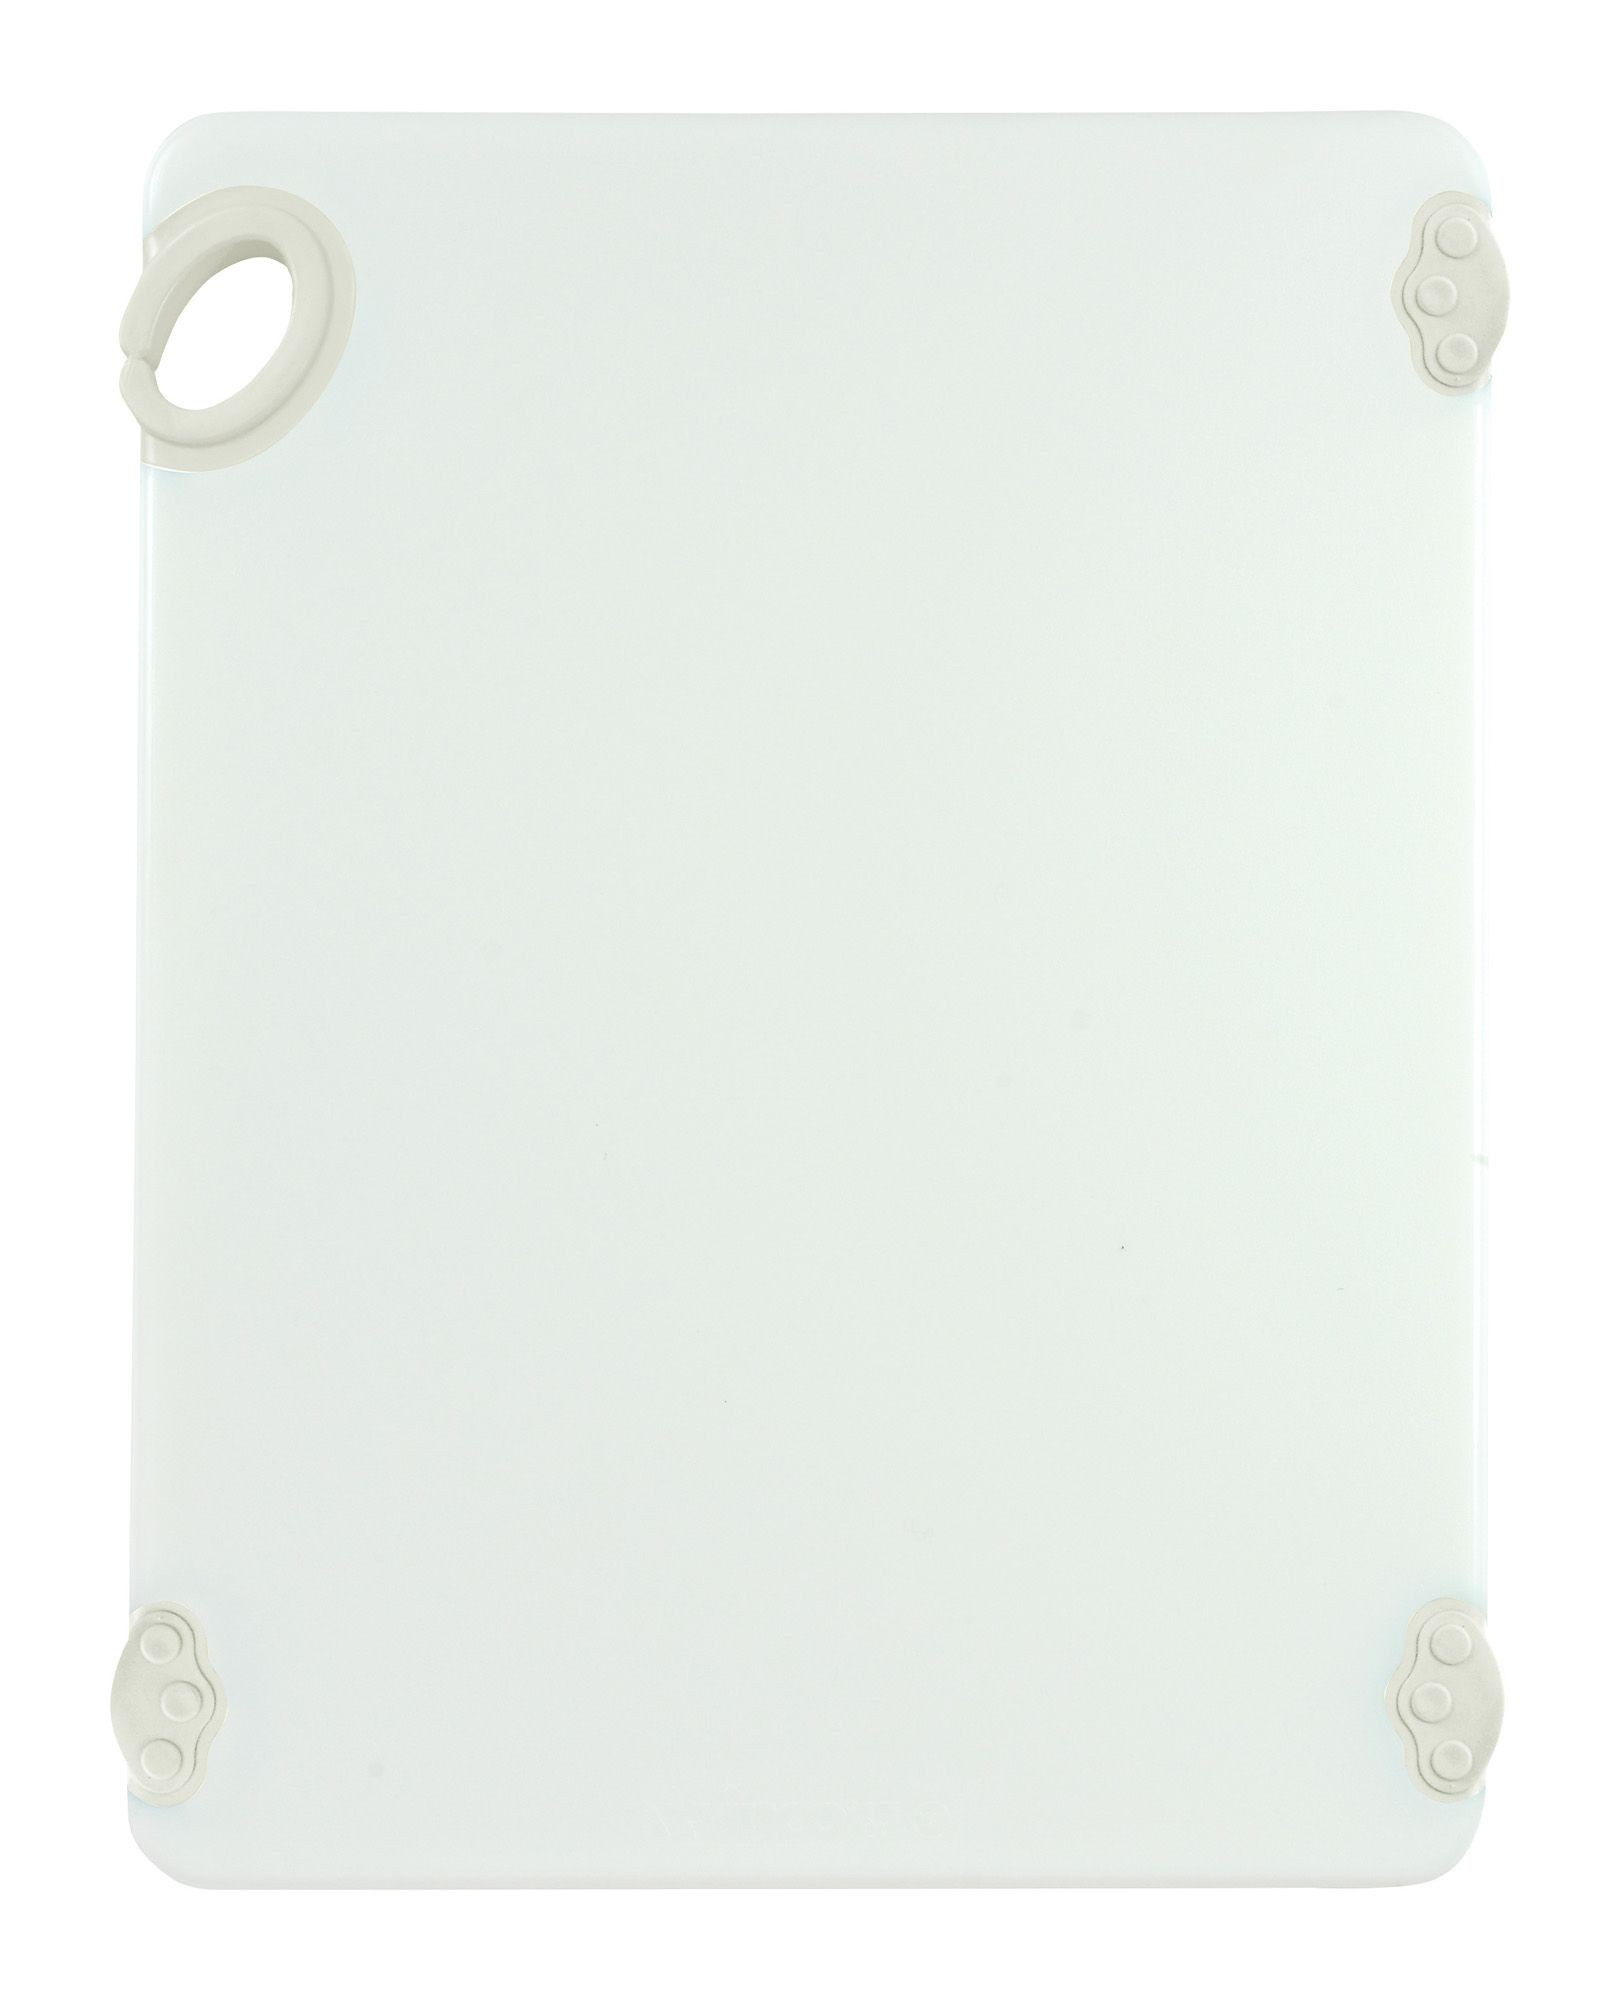 Winco CBI-1824 Grooved White Cutting Board 18 x 24 x 1/2